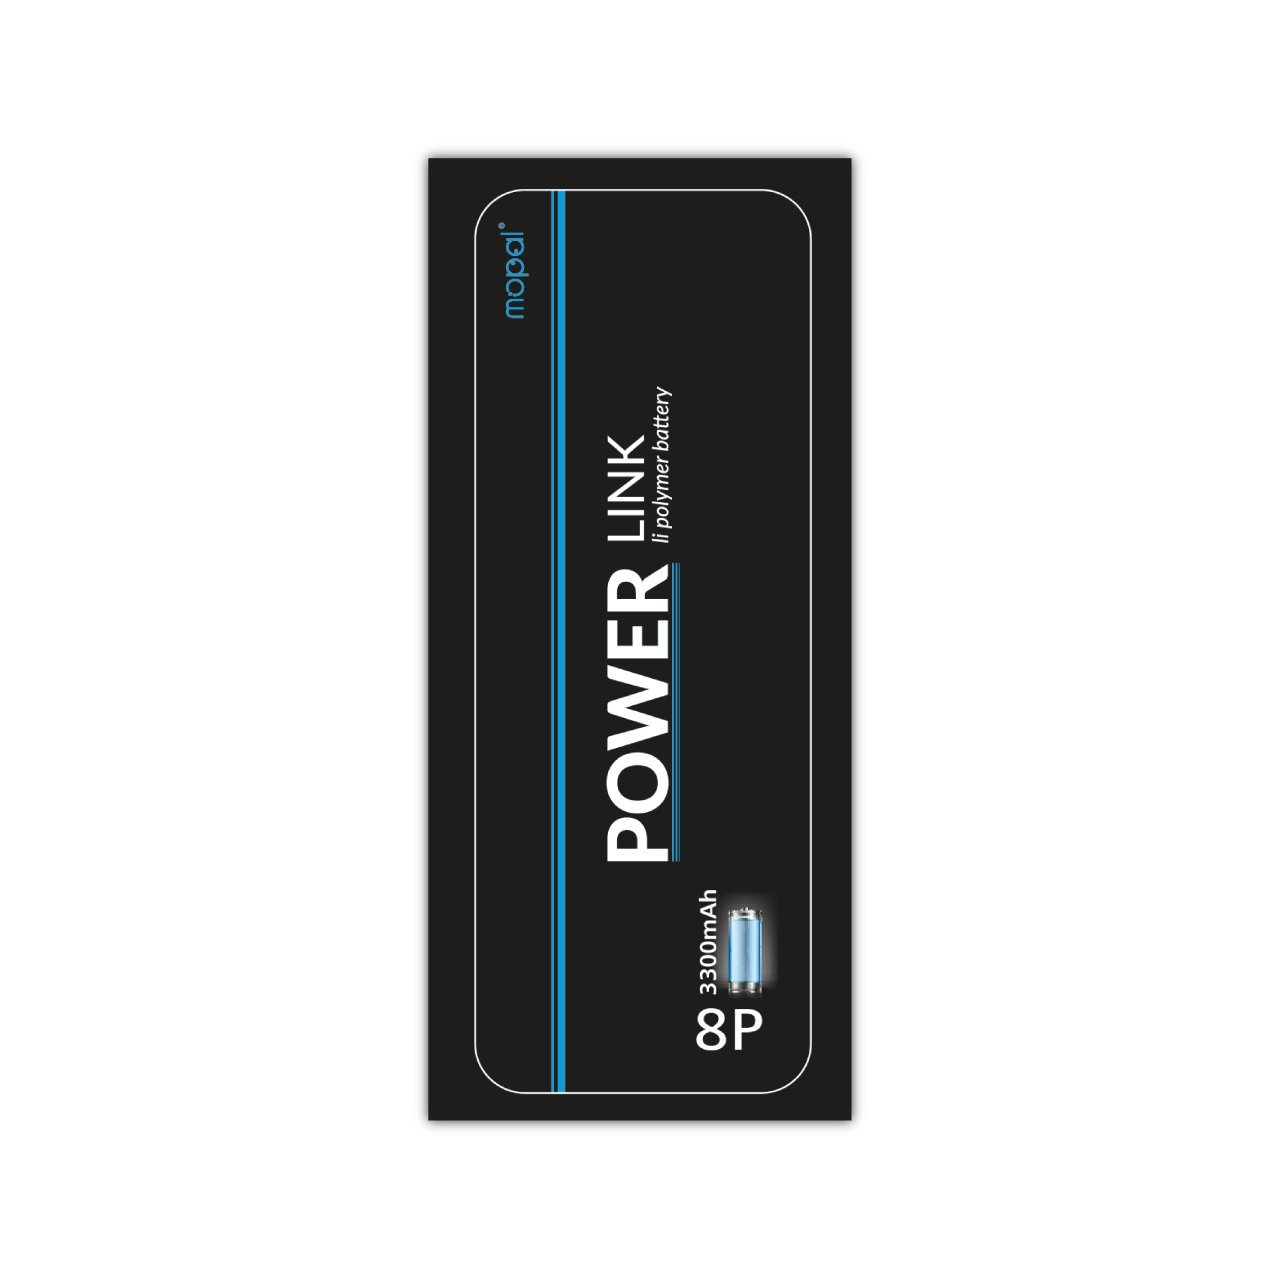 Mopal Power Link İphone 8 Plus Ekstra Güçlü 3300 Mah Batarya